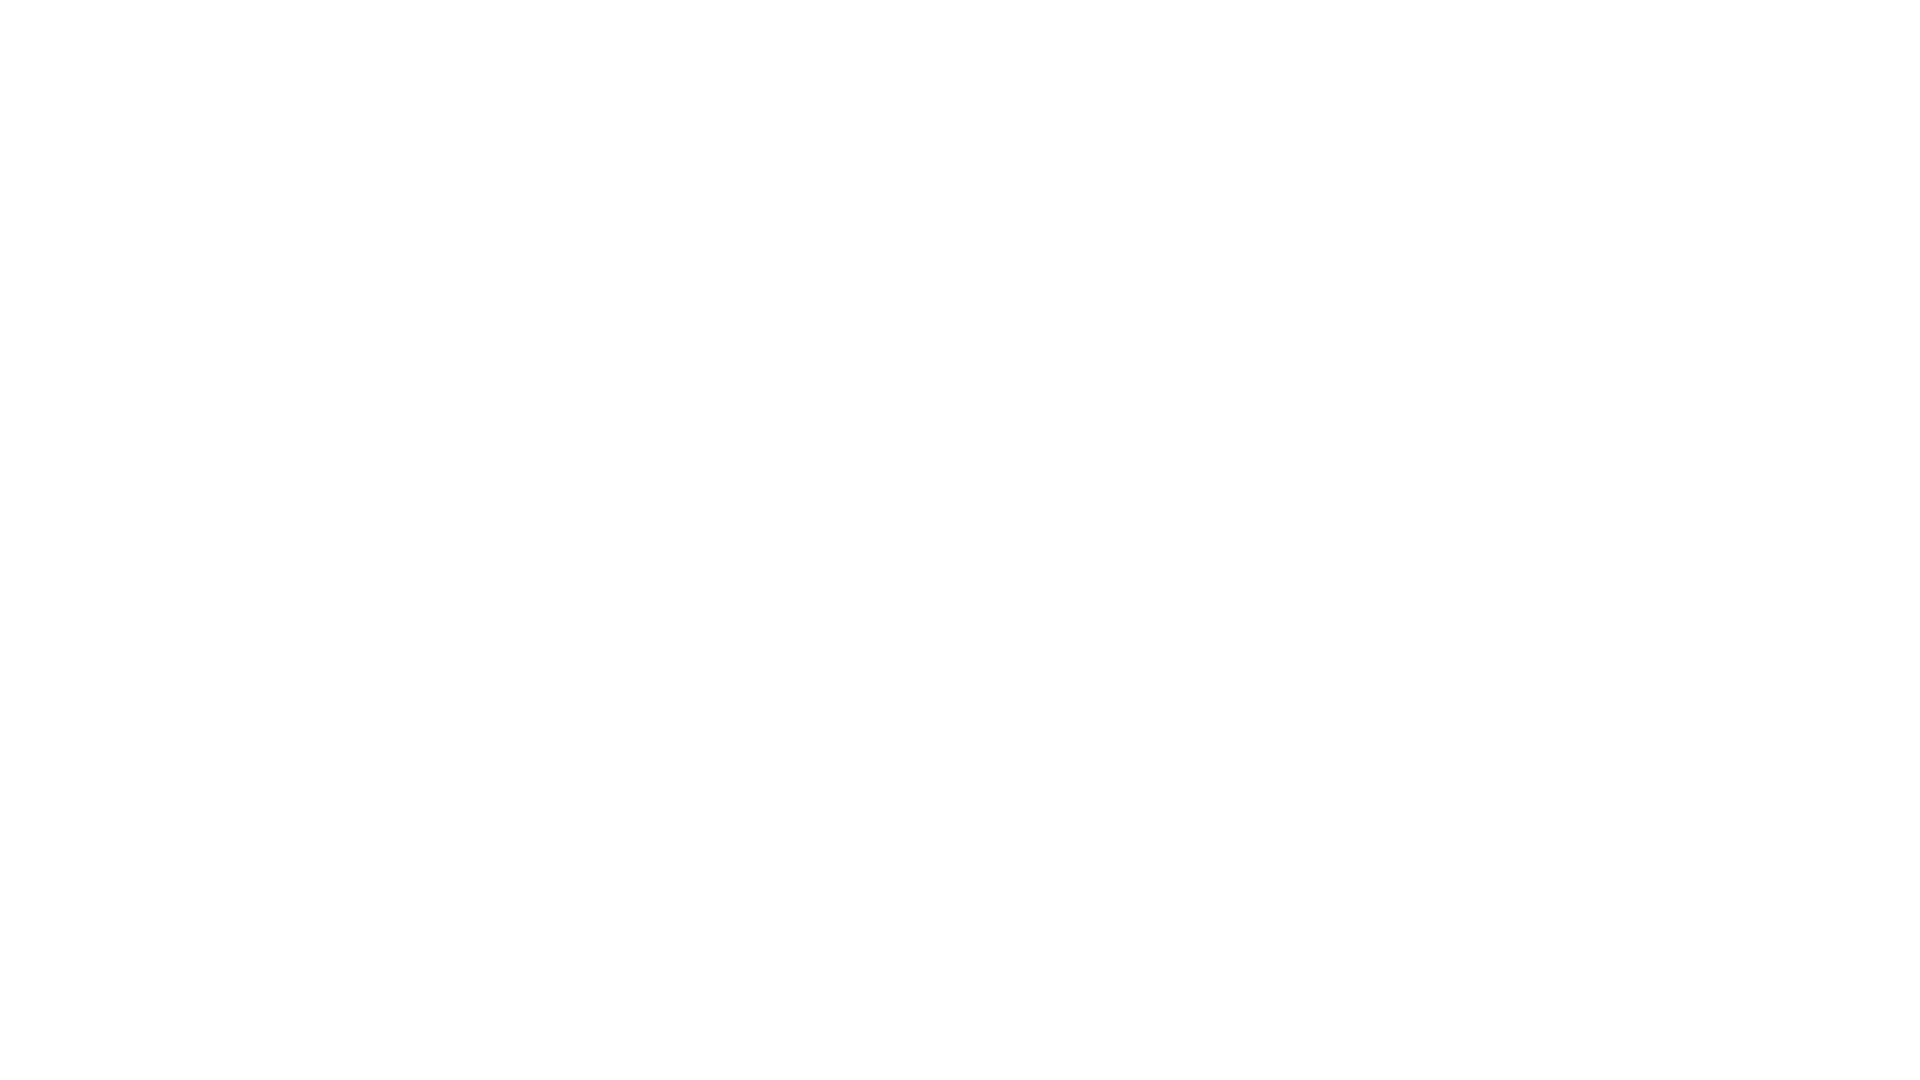 Trial-Pro logo